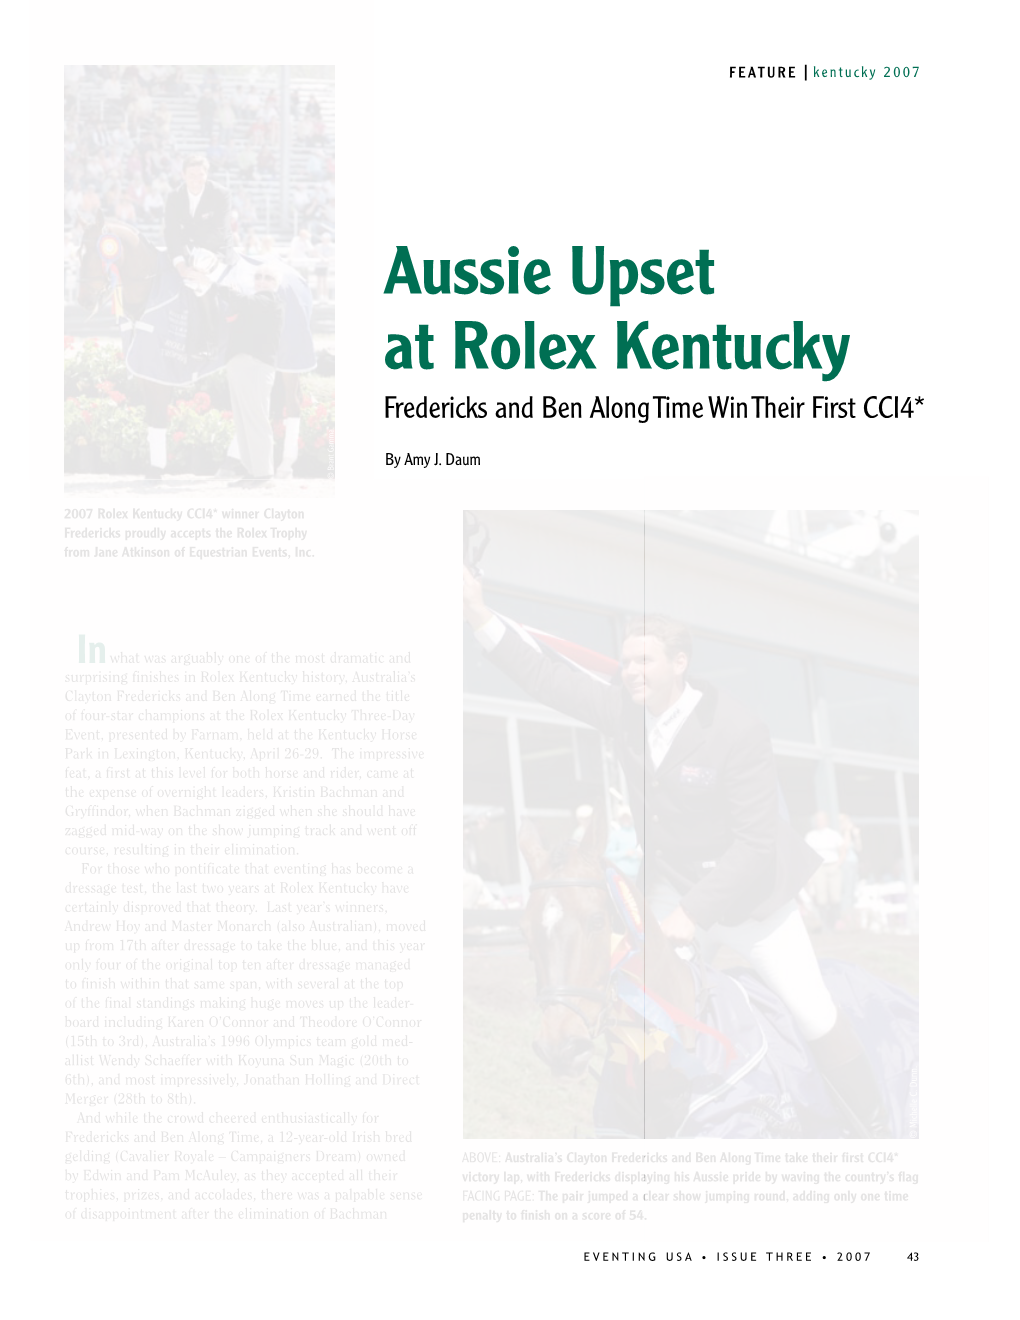 Aussie Upset at Rolex Kentucky Fredericks and Ben Along Time Win Their First CCI4*